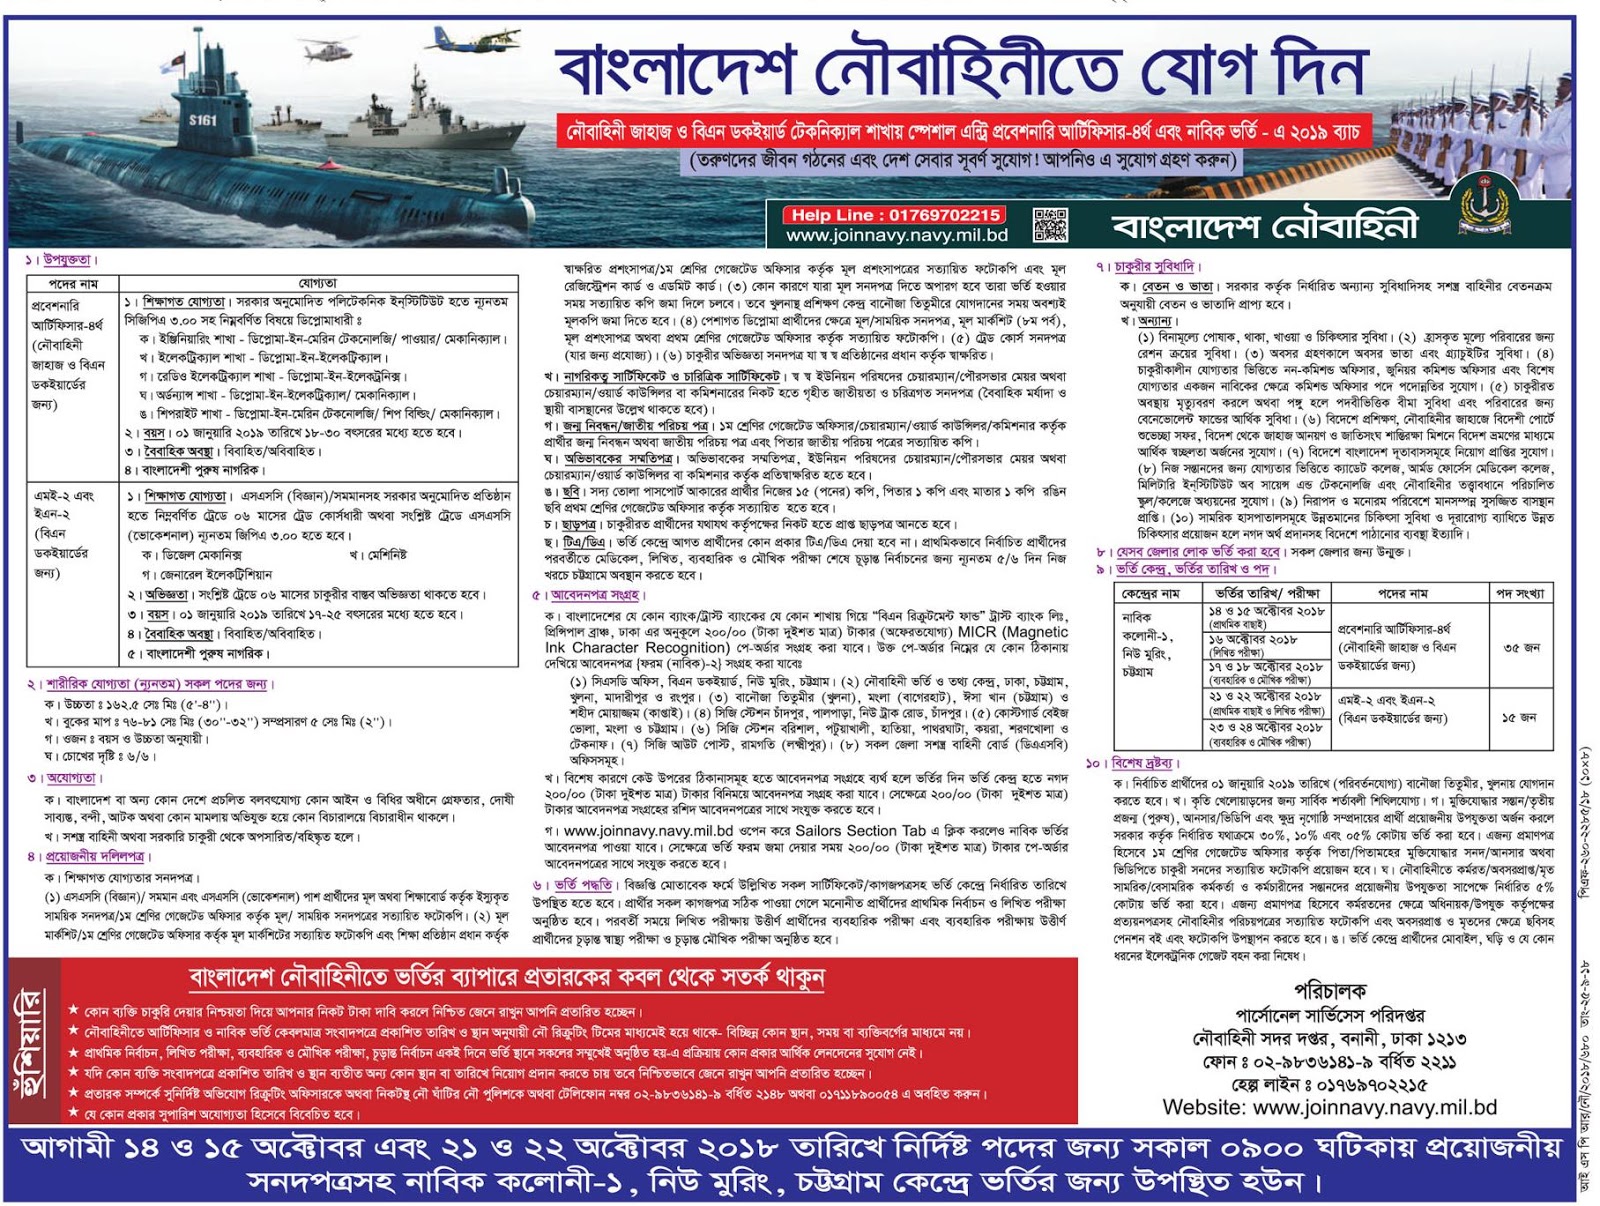 Bangladesh Navy Sailor and Special Entry Probationary Artificer Recruitment Circular 2018